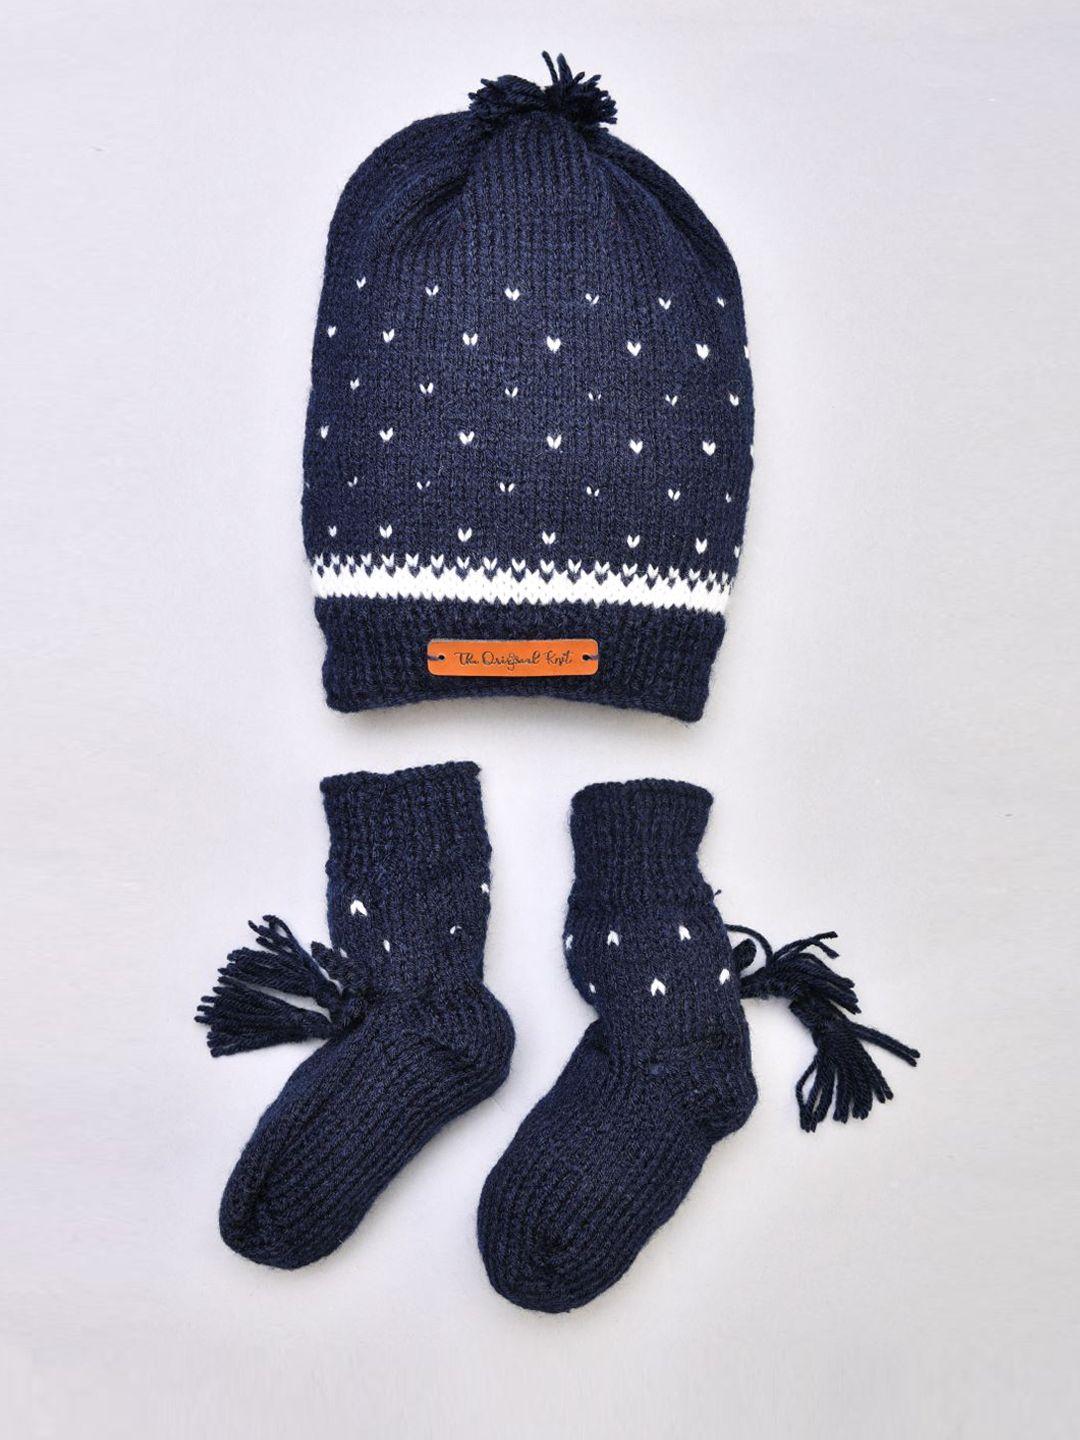 the original knit unisex kids navy blue & white beanie with socks